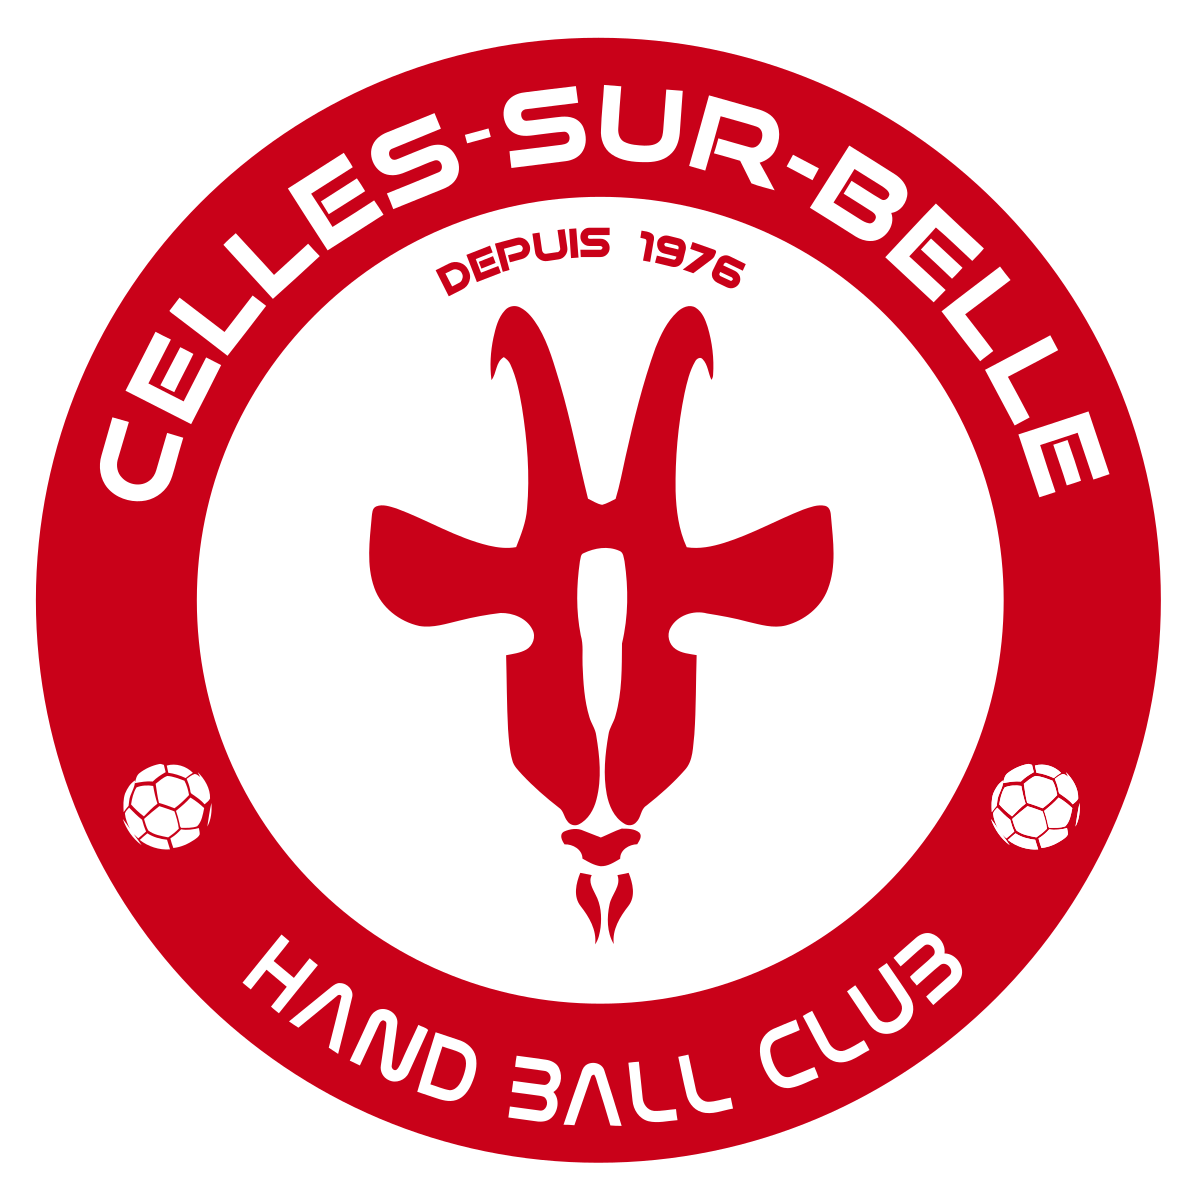 Handball Club Celles-sur-Belle